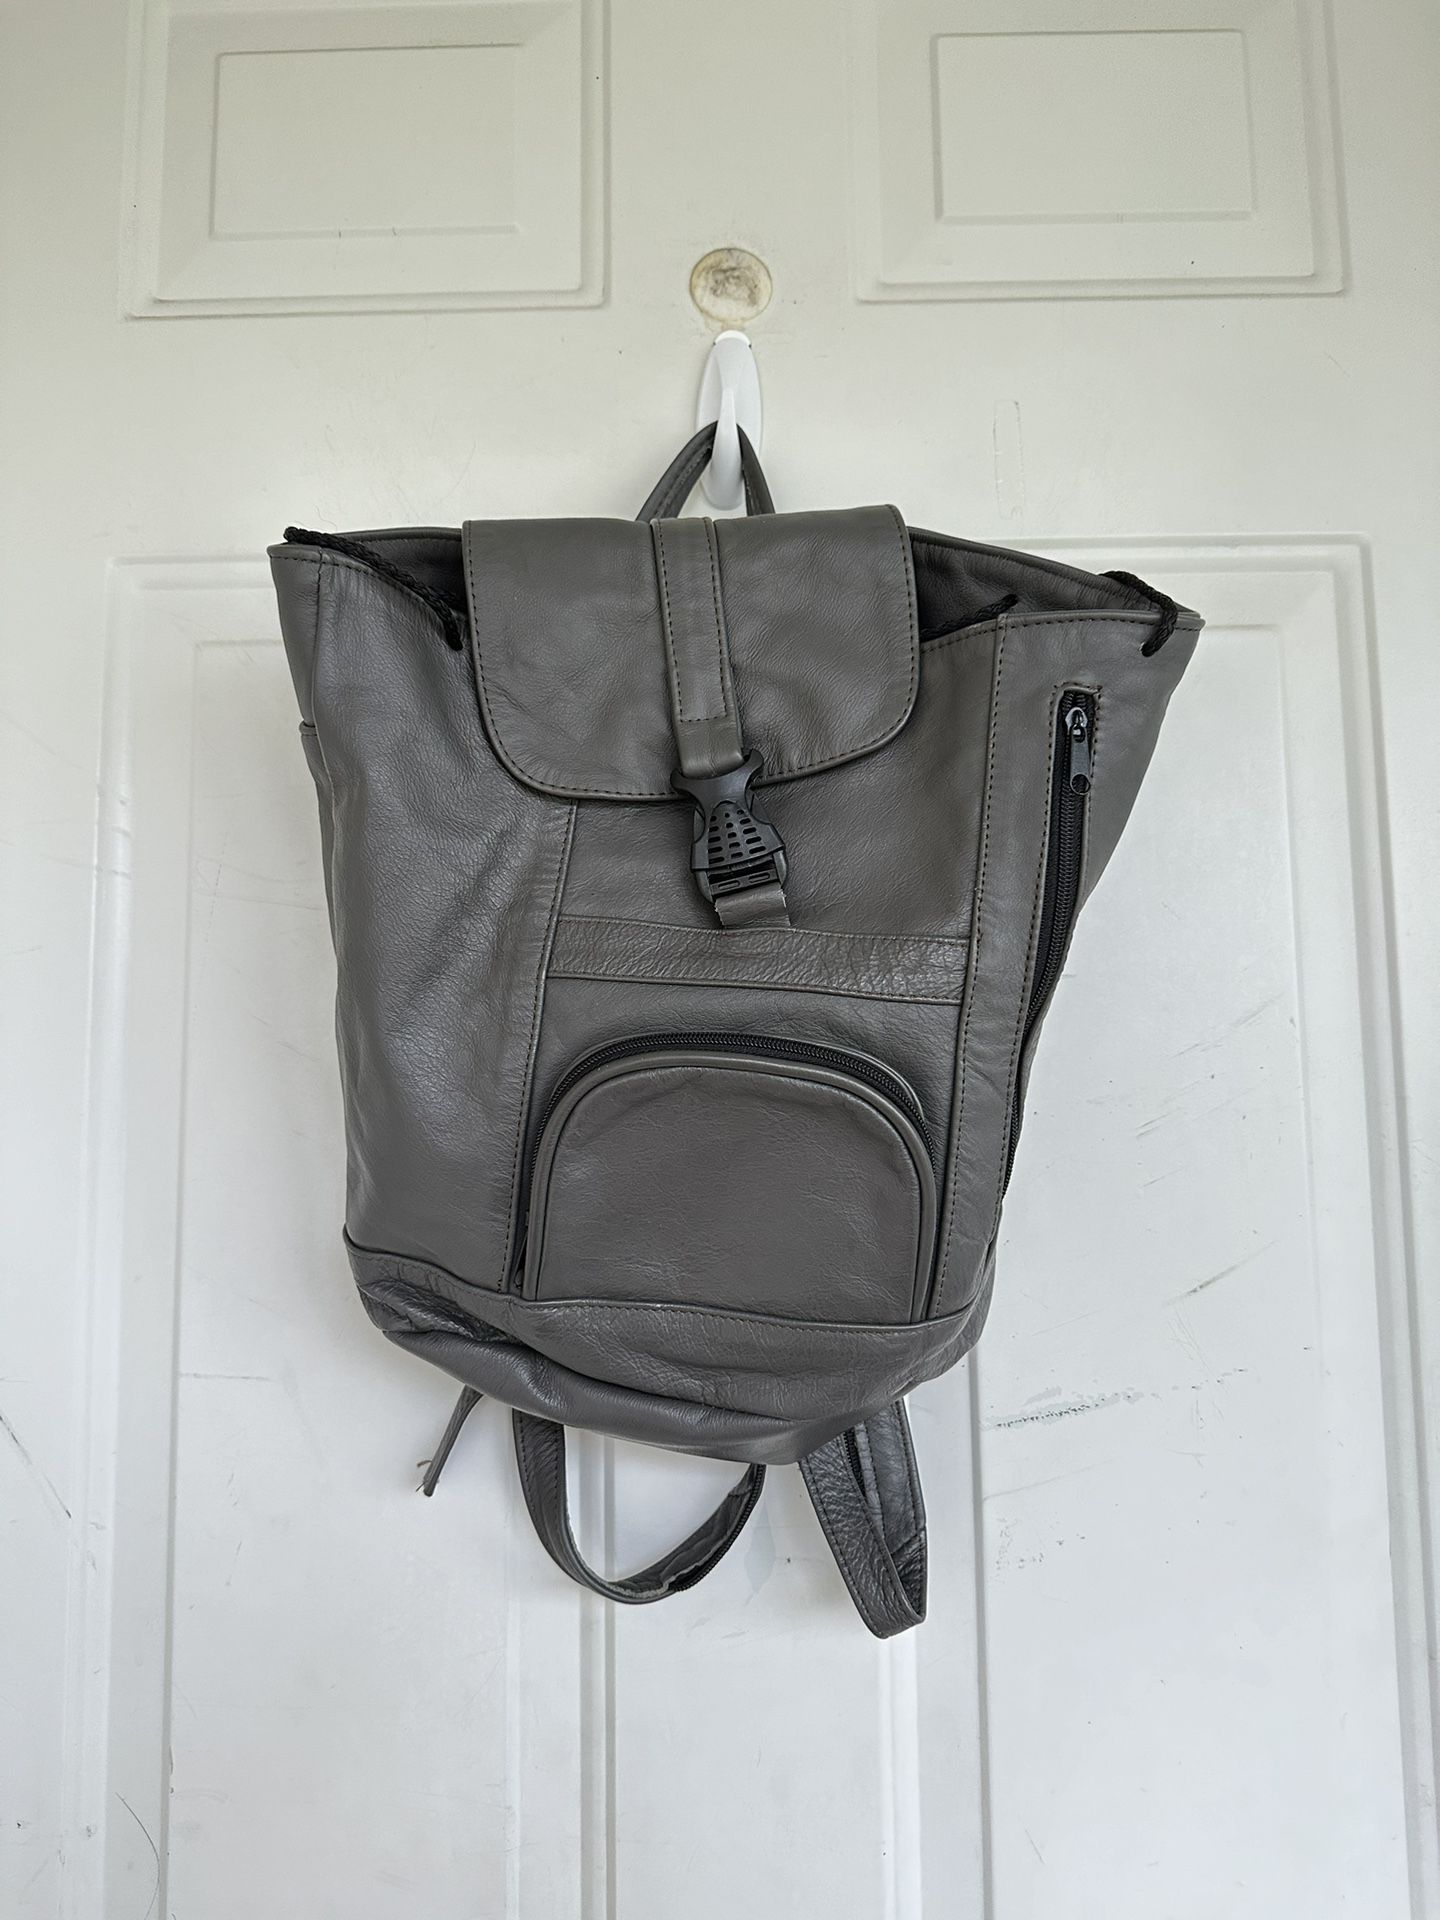 Medium Bucket Backpack Daypack Purse School Bag Leather